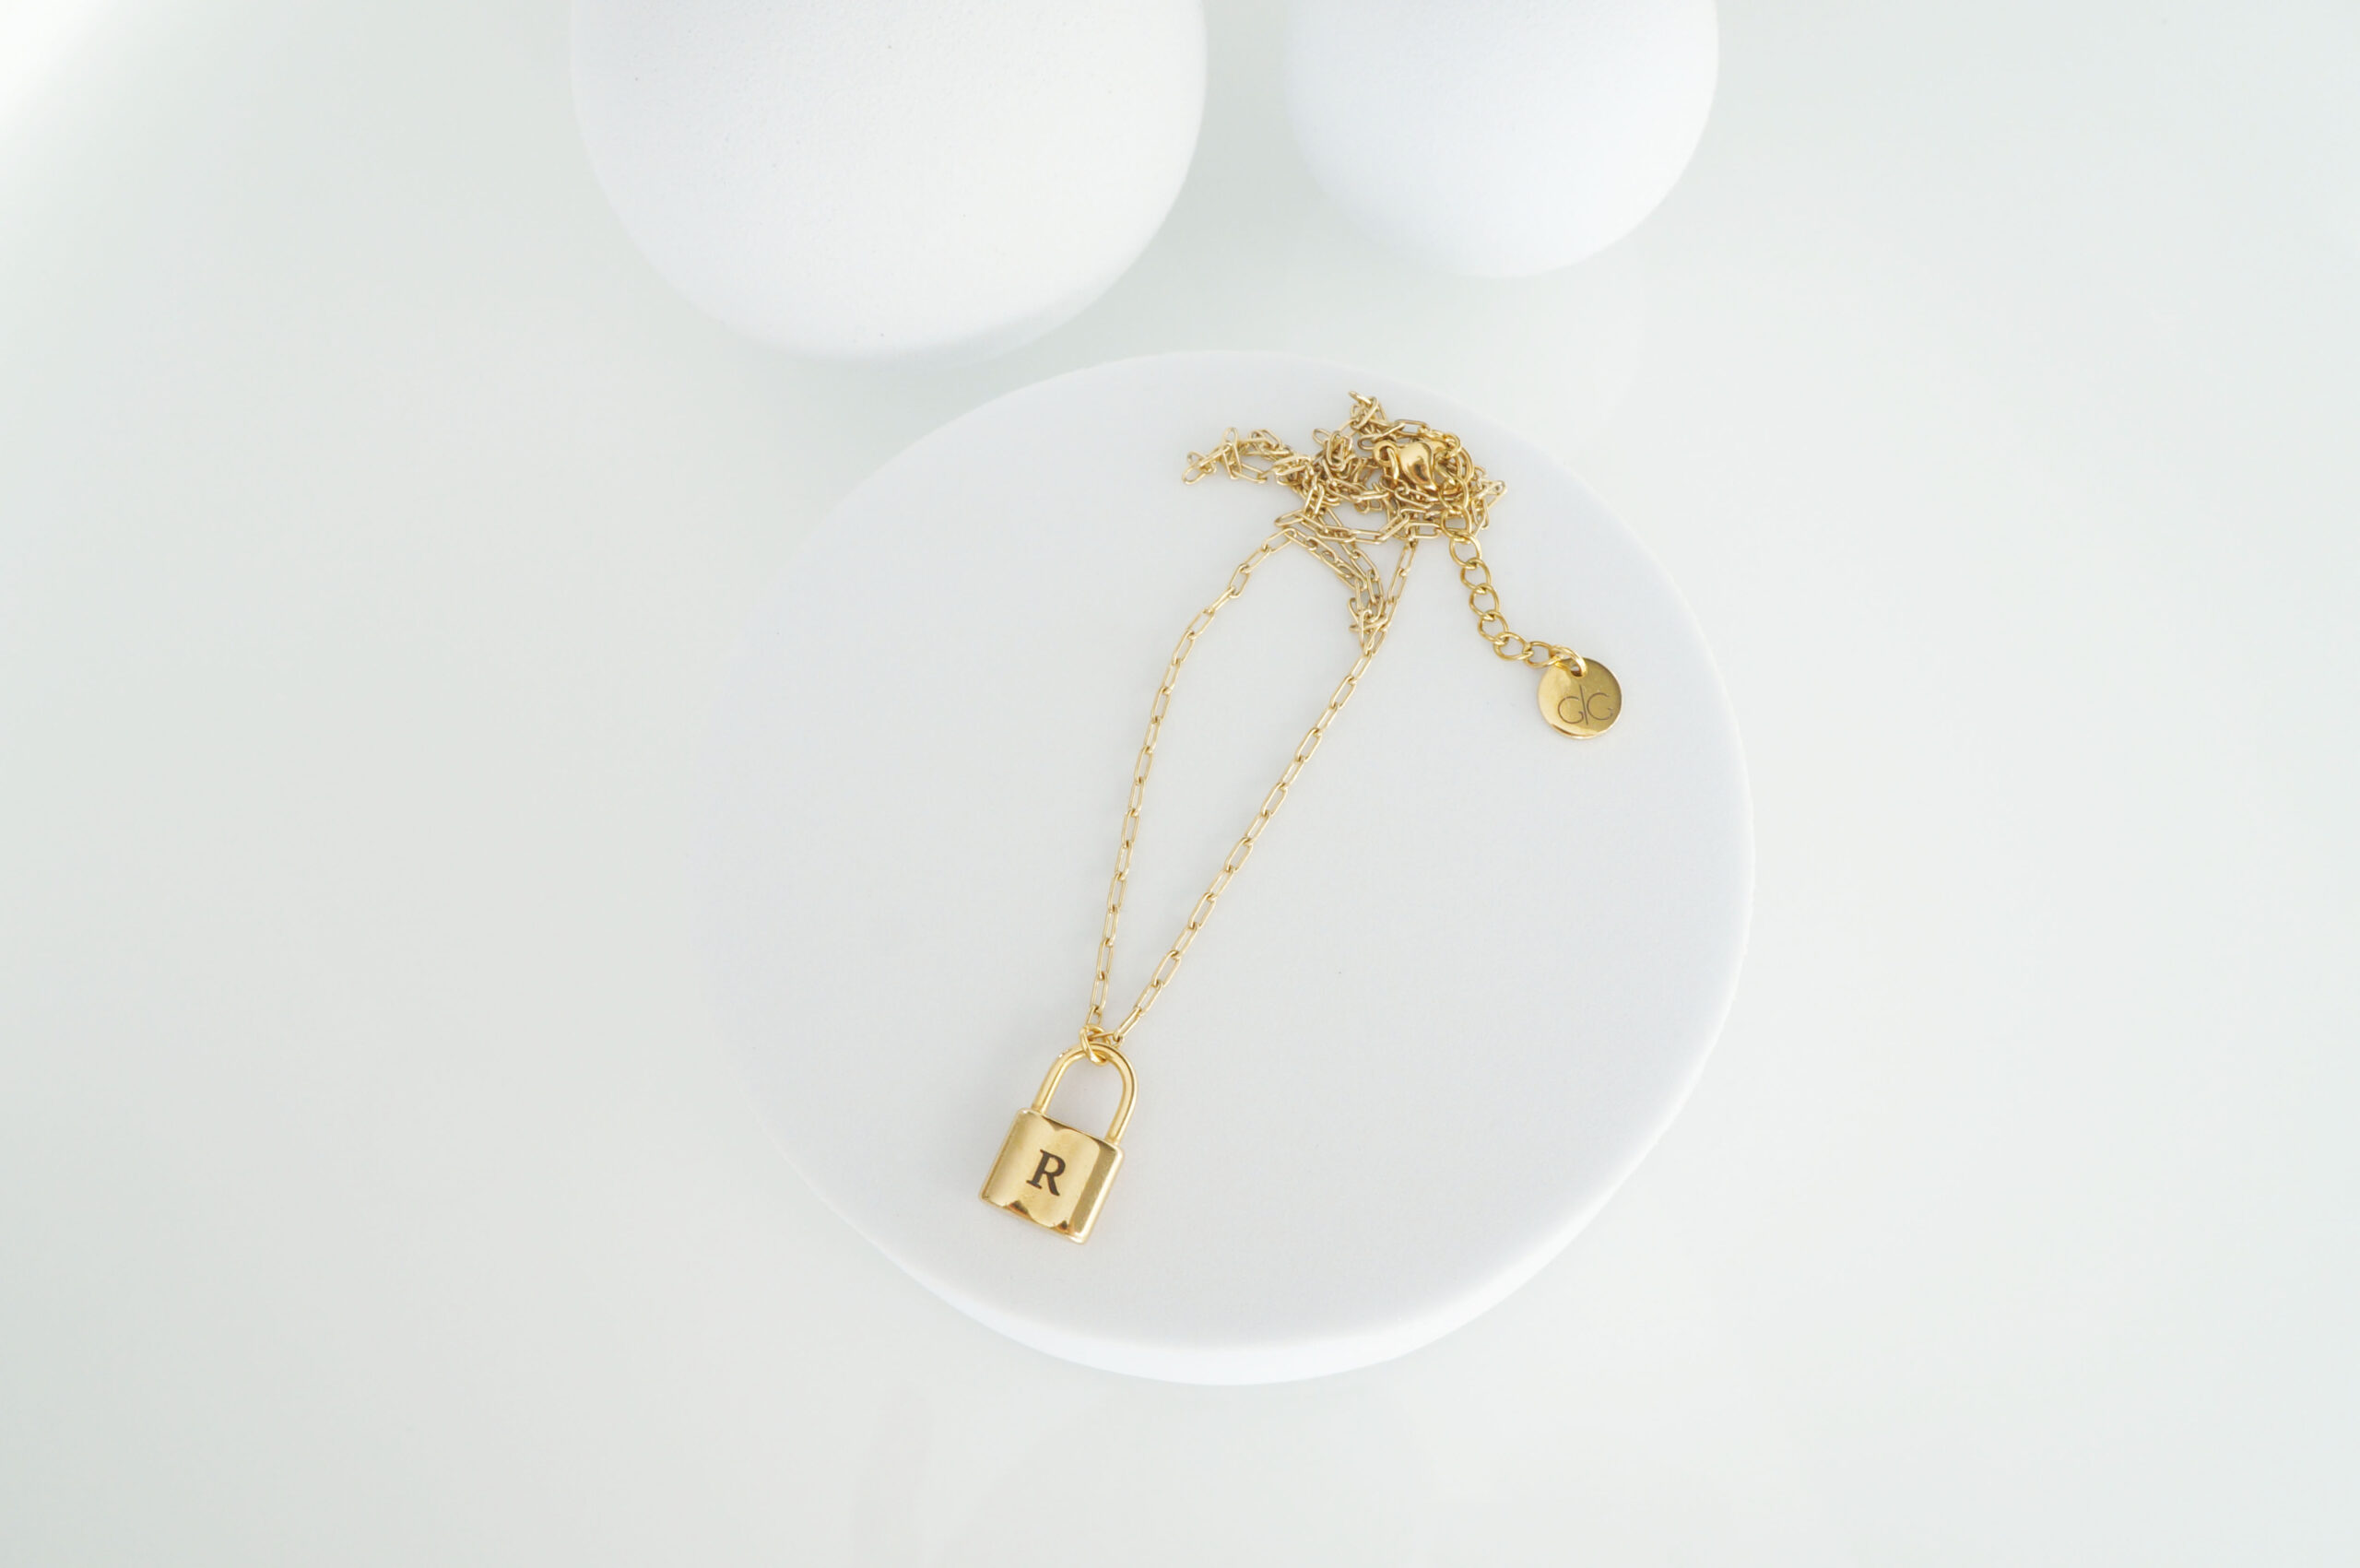 Personalized gold locker pendant necklace - GG UNIQUE